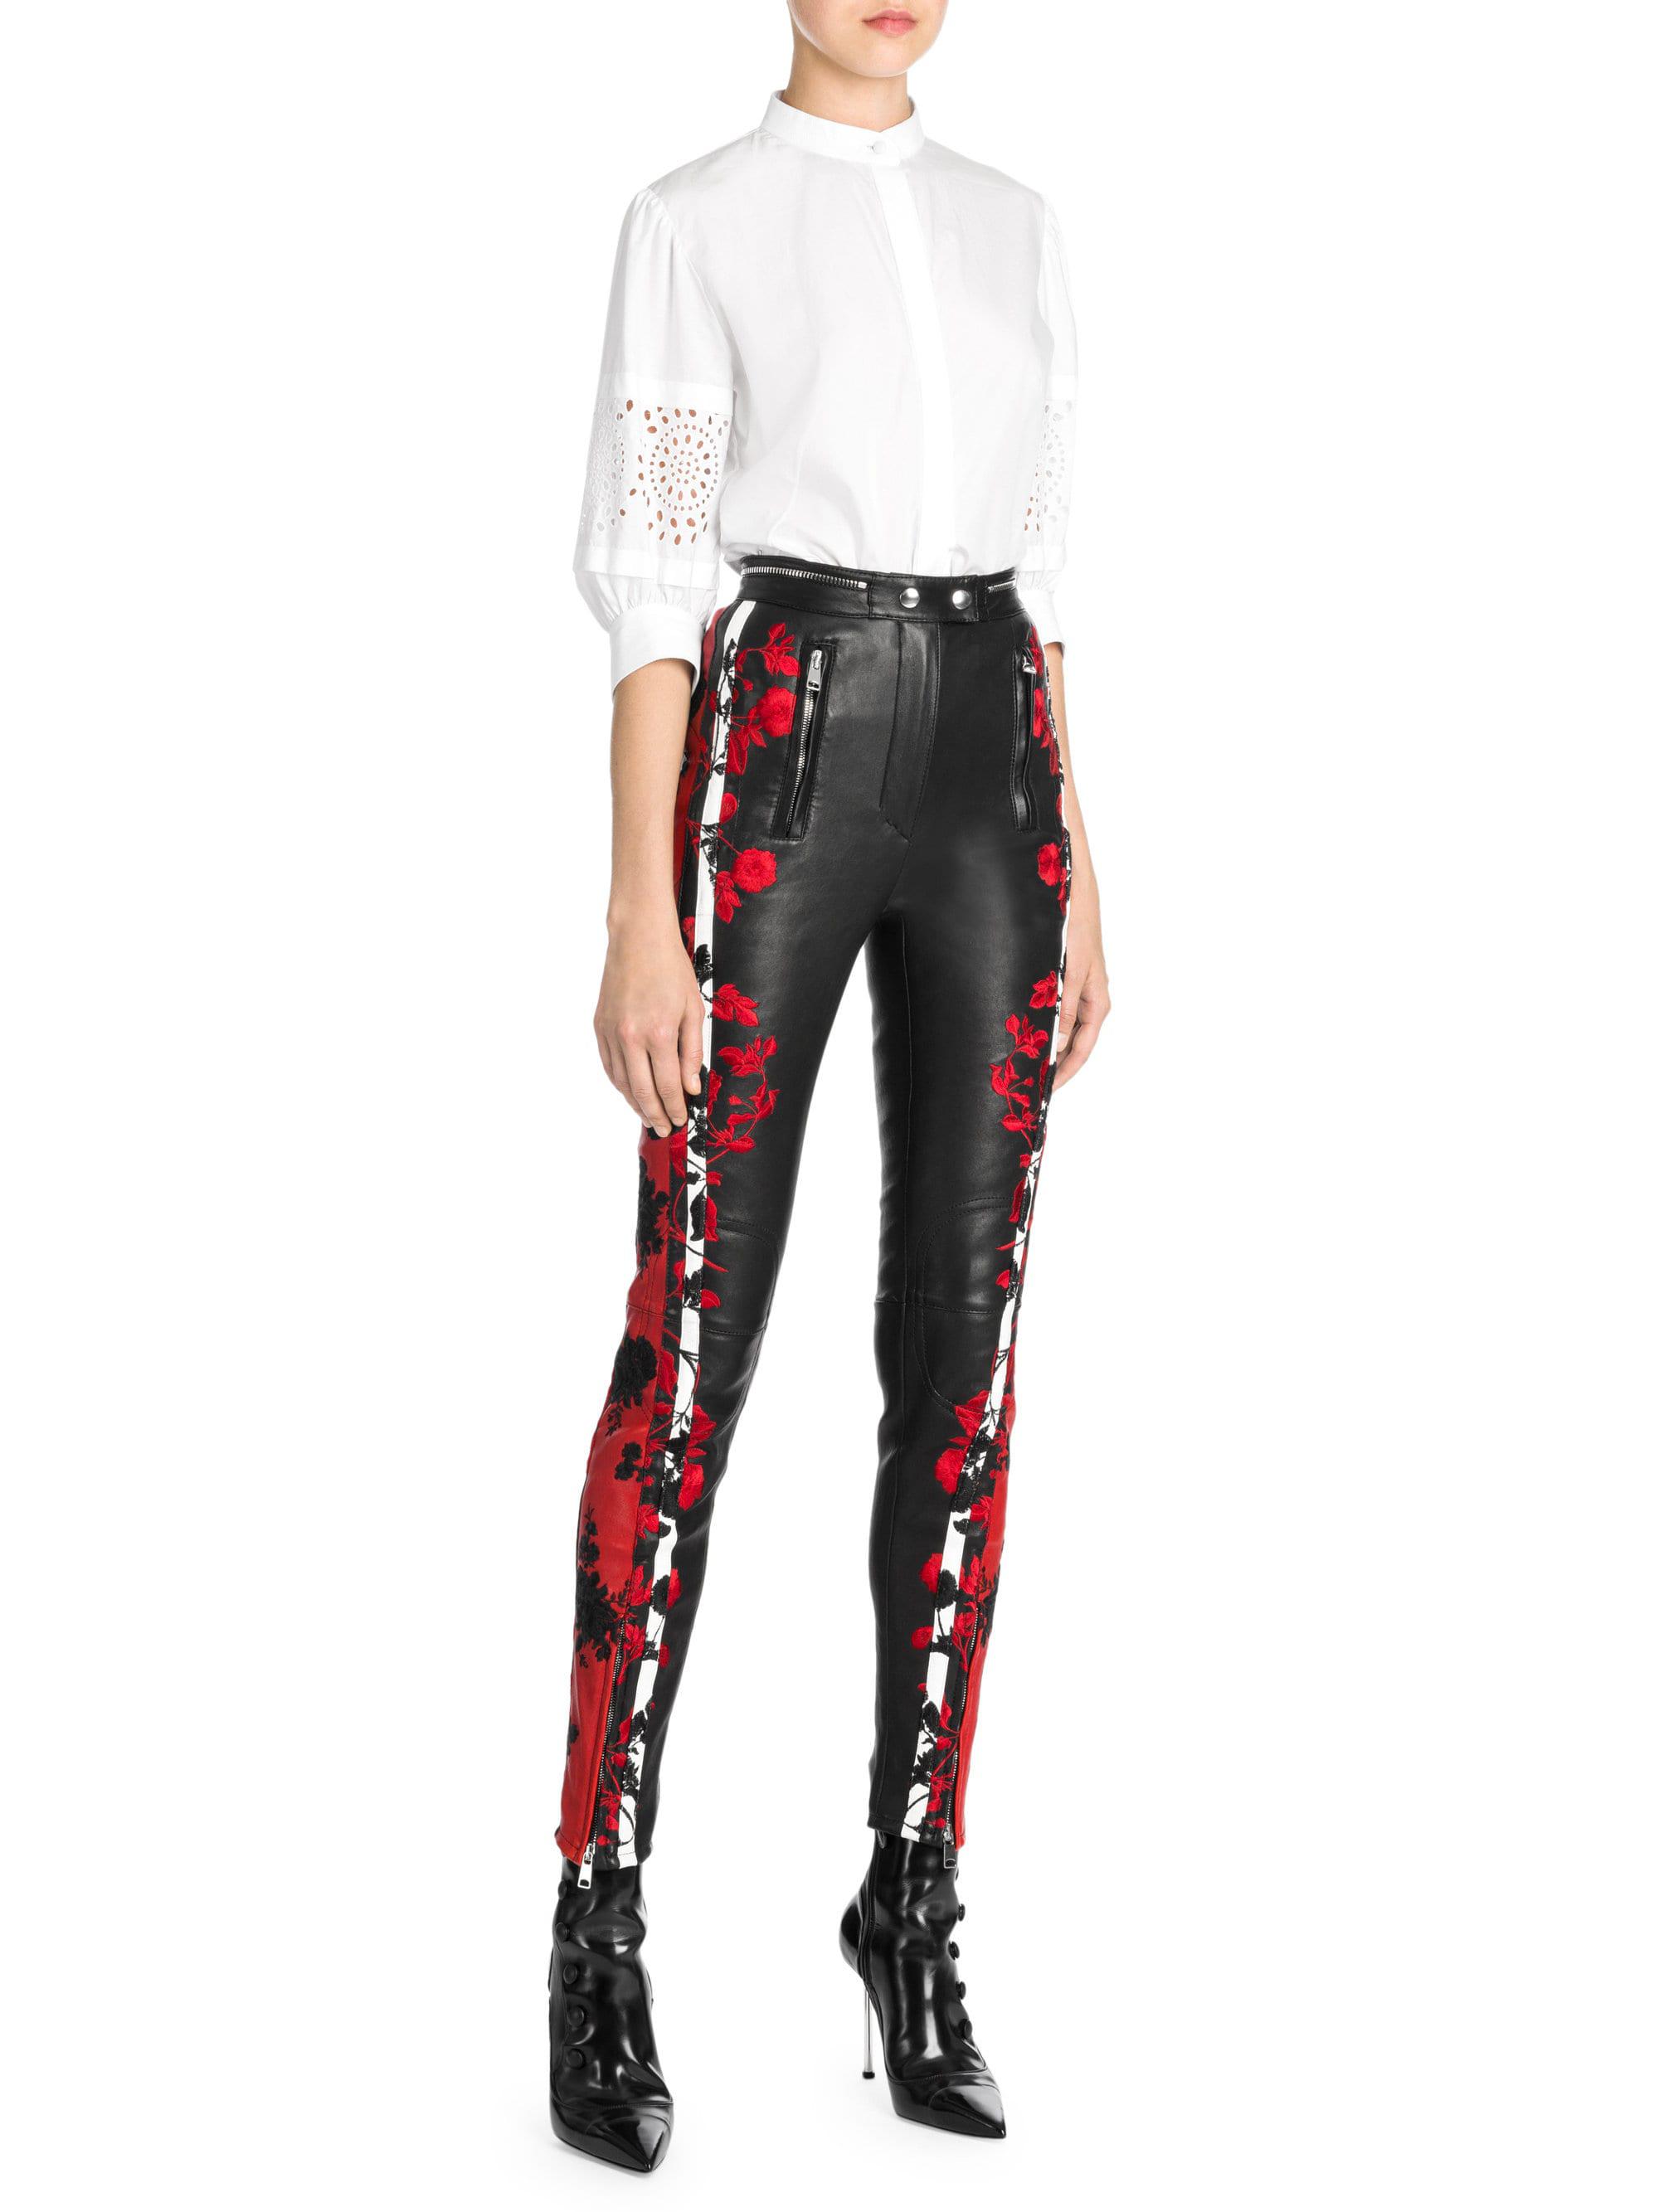 Alexander McQueen Floral Stripe Leather Pants in Black - Lyst